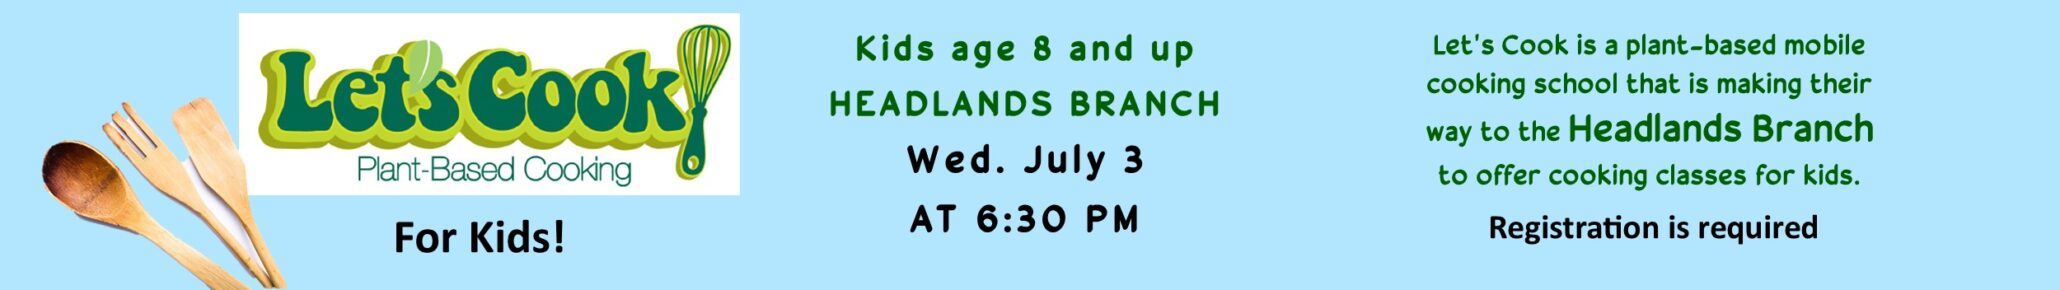 lets cook kids at the headlands branch on july 3